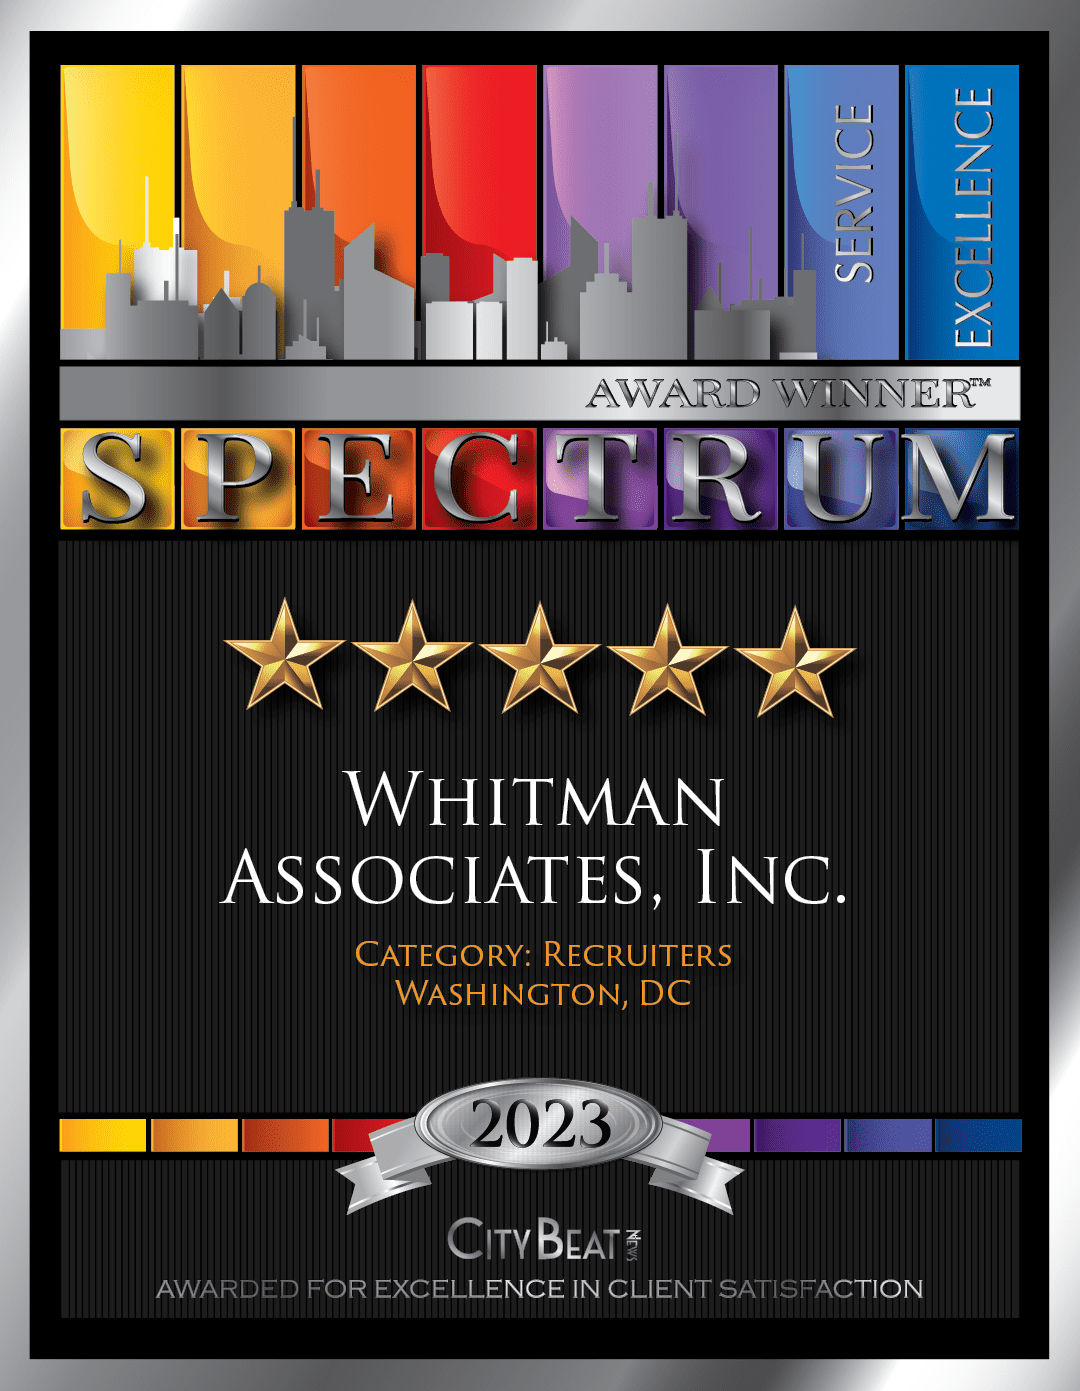 whitman associates inc 2023 spectrum award